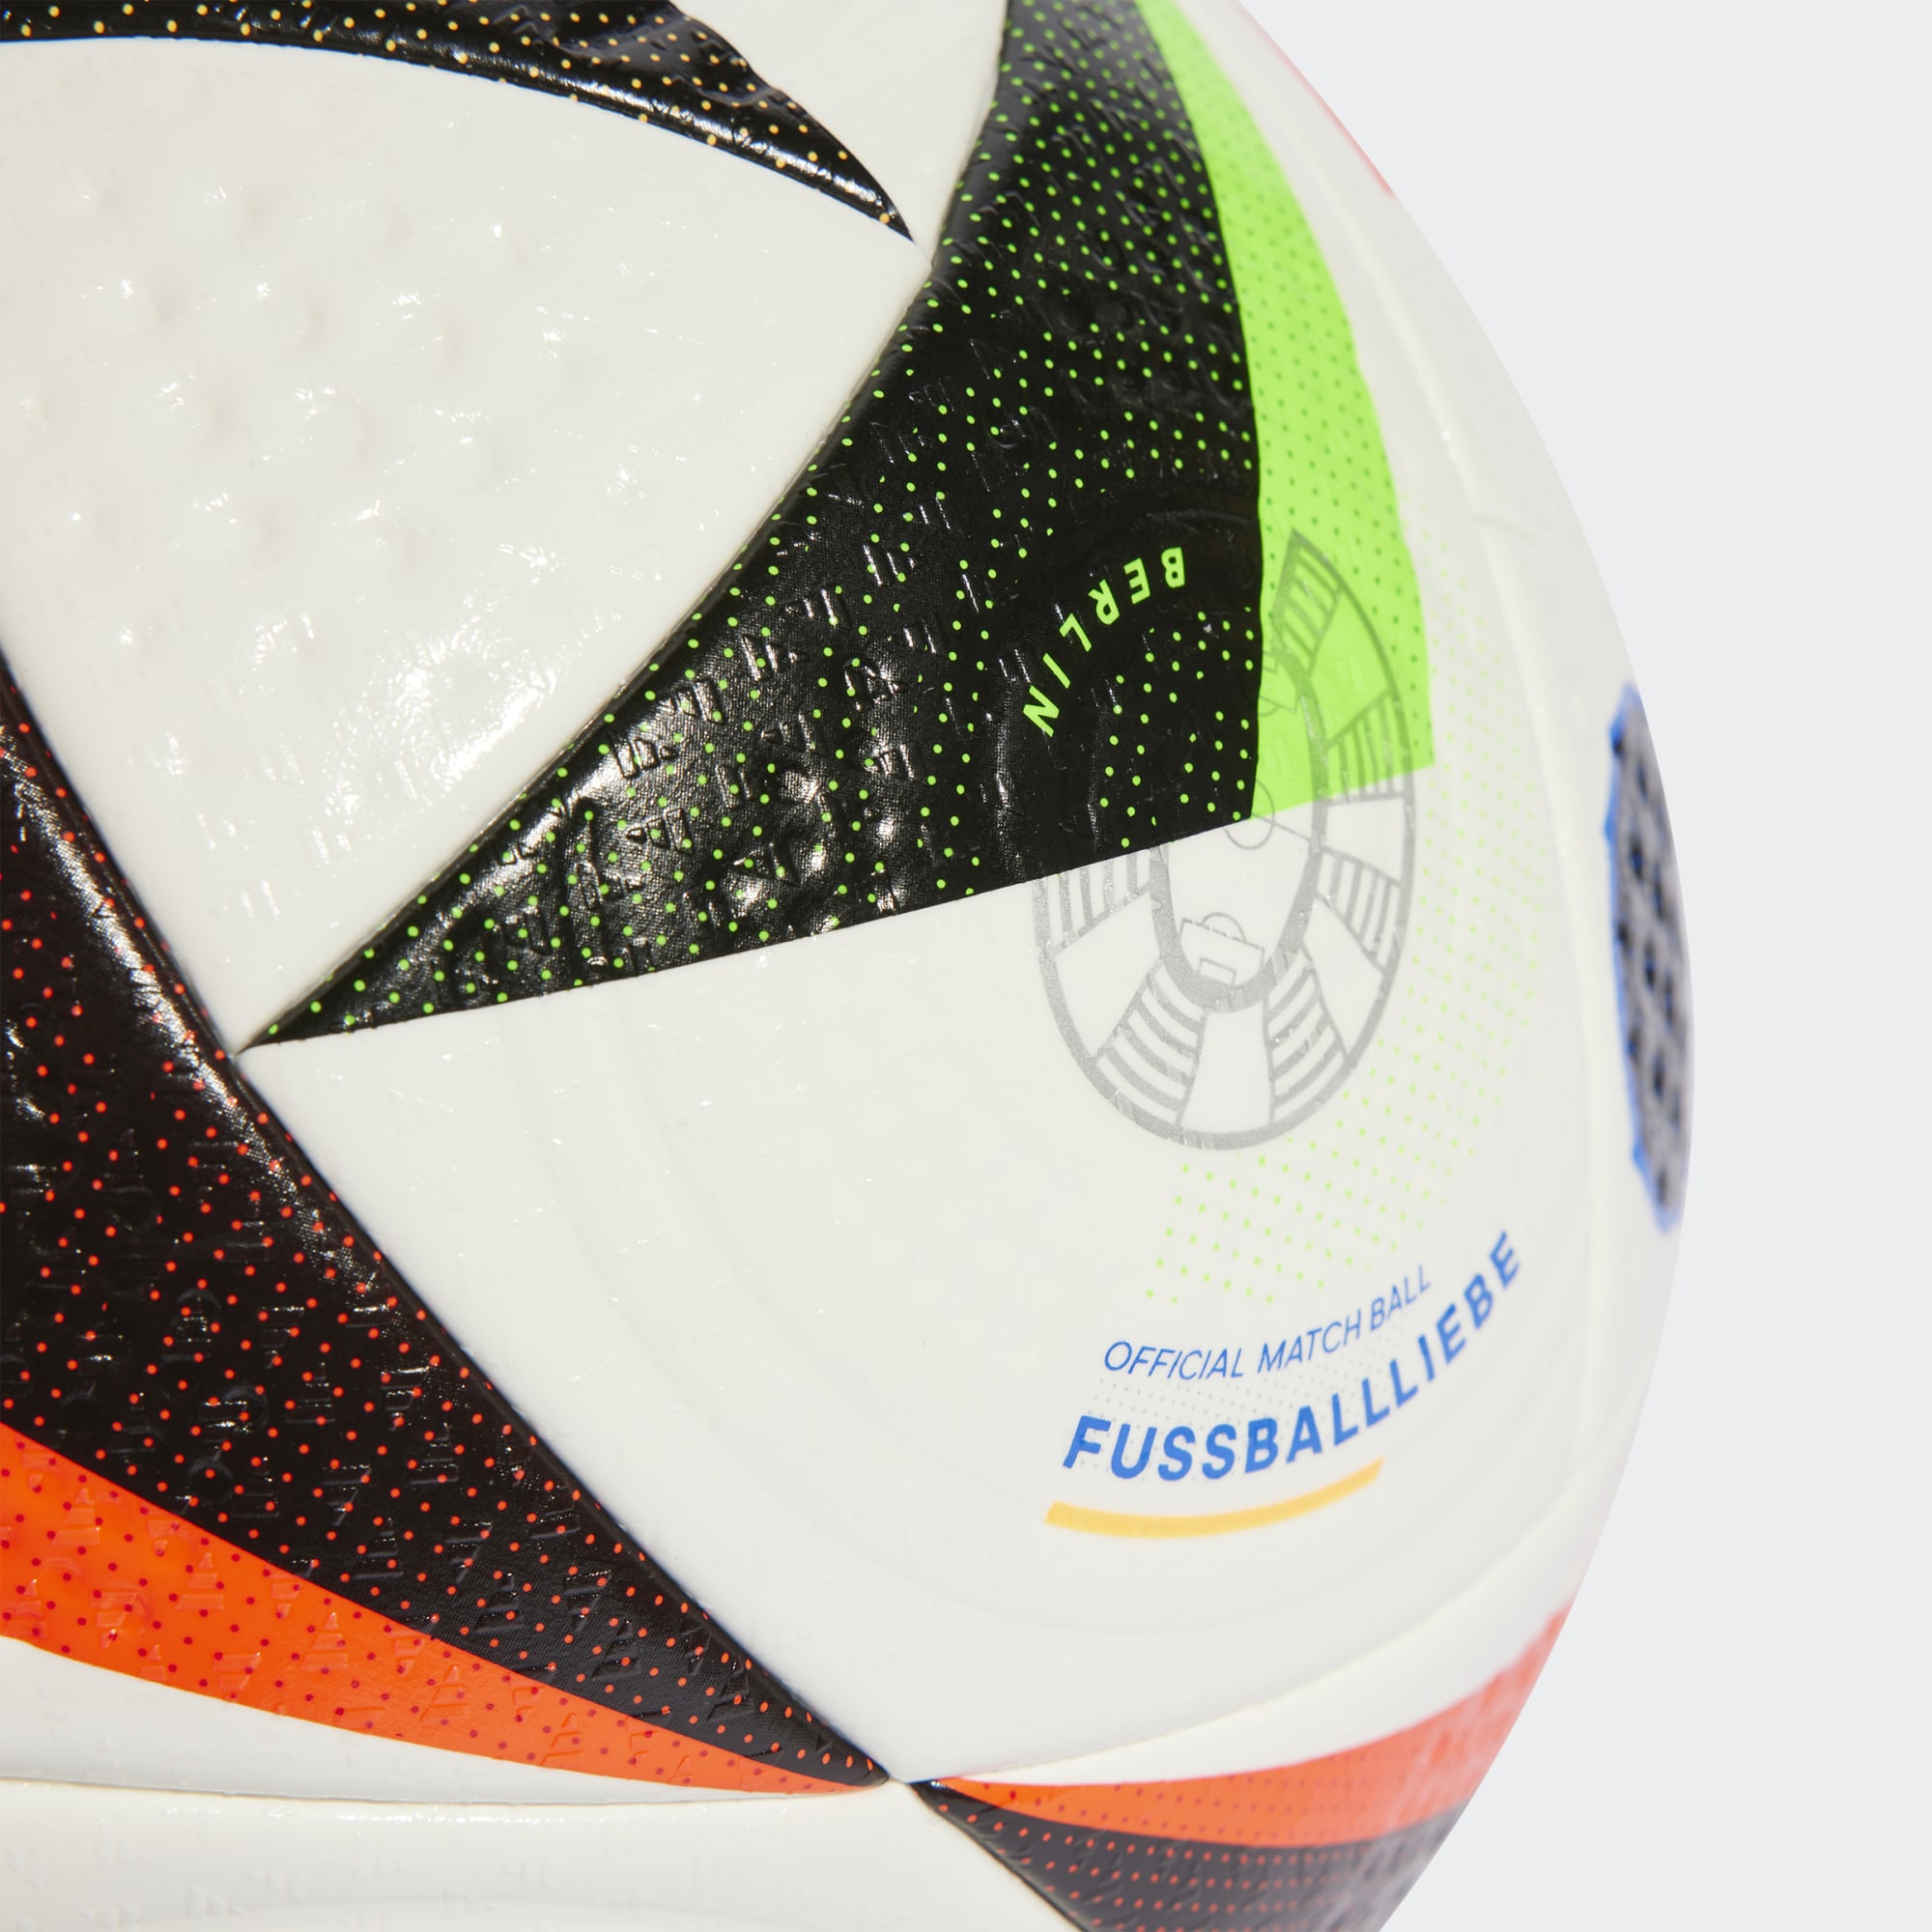 Adidas unveils official match ball for UEFA Euro 2024